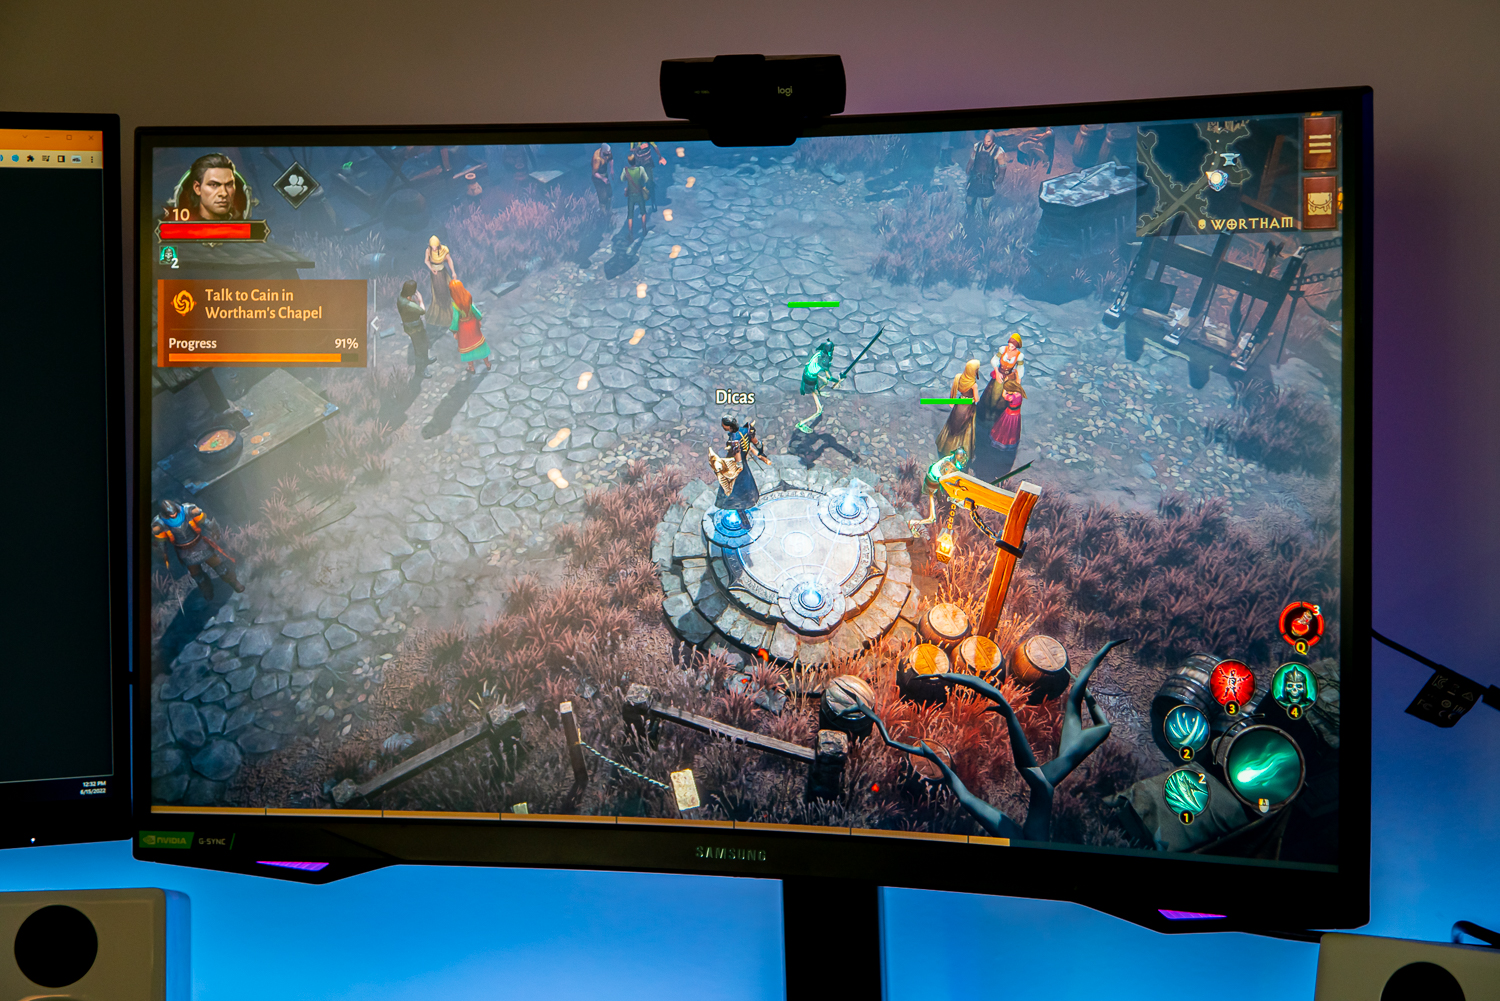 Diablo 4 Release Date Review Price Steam PC Open Beta System